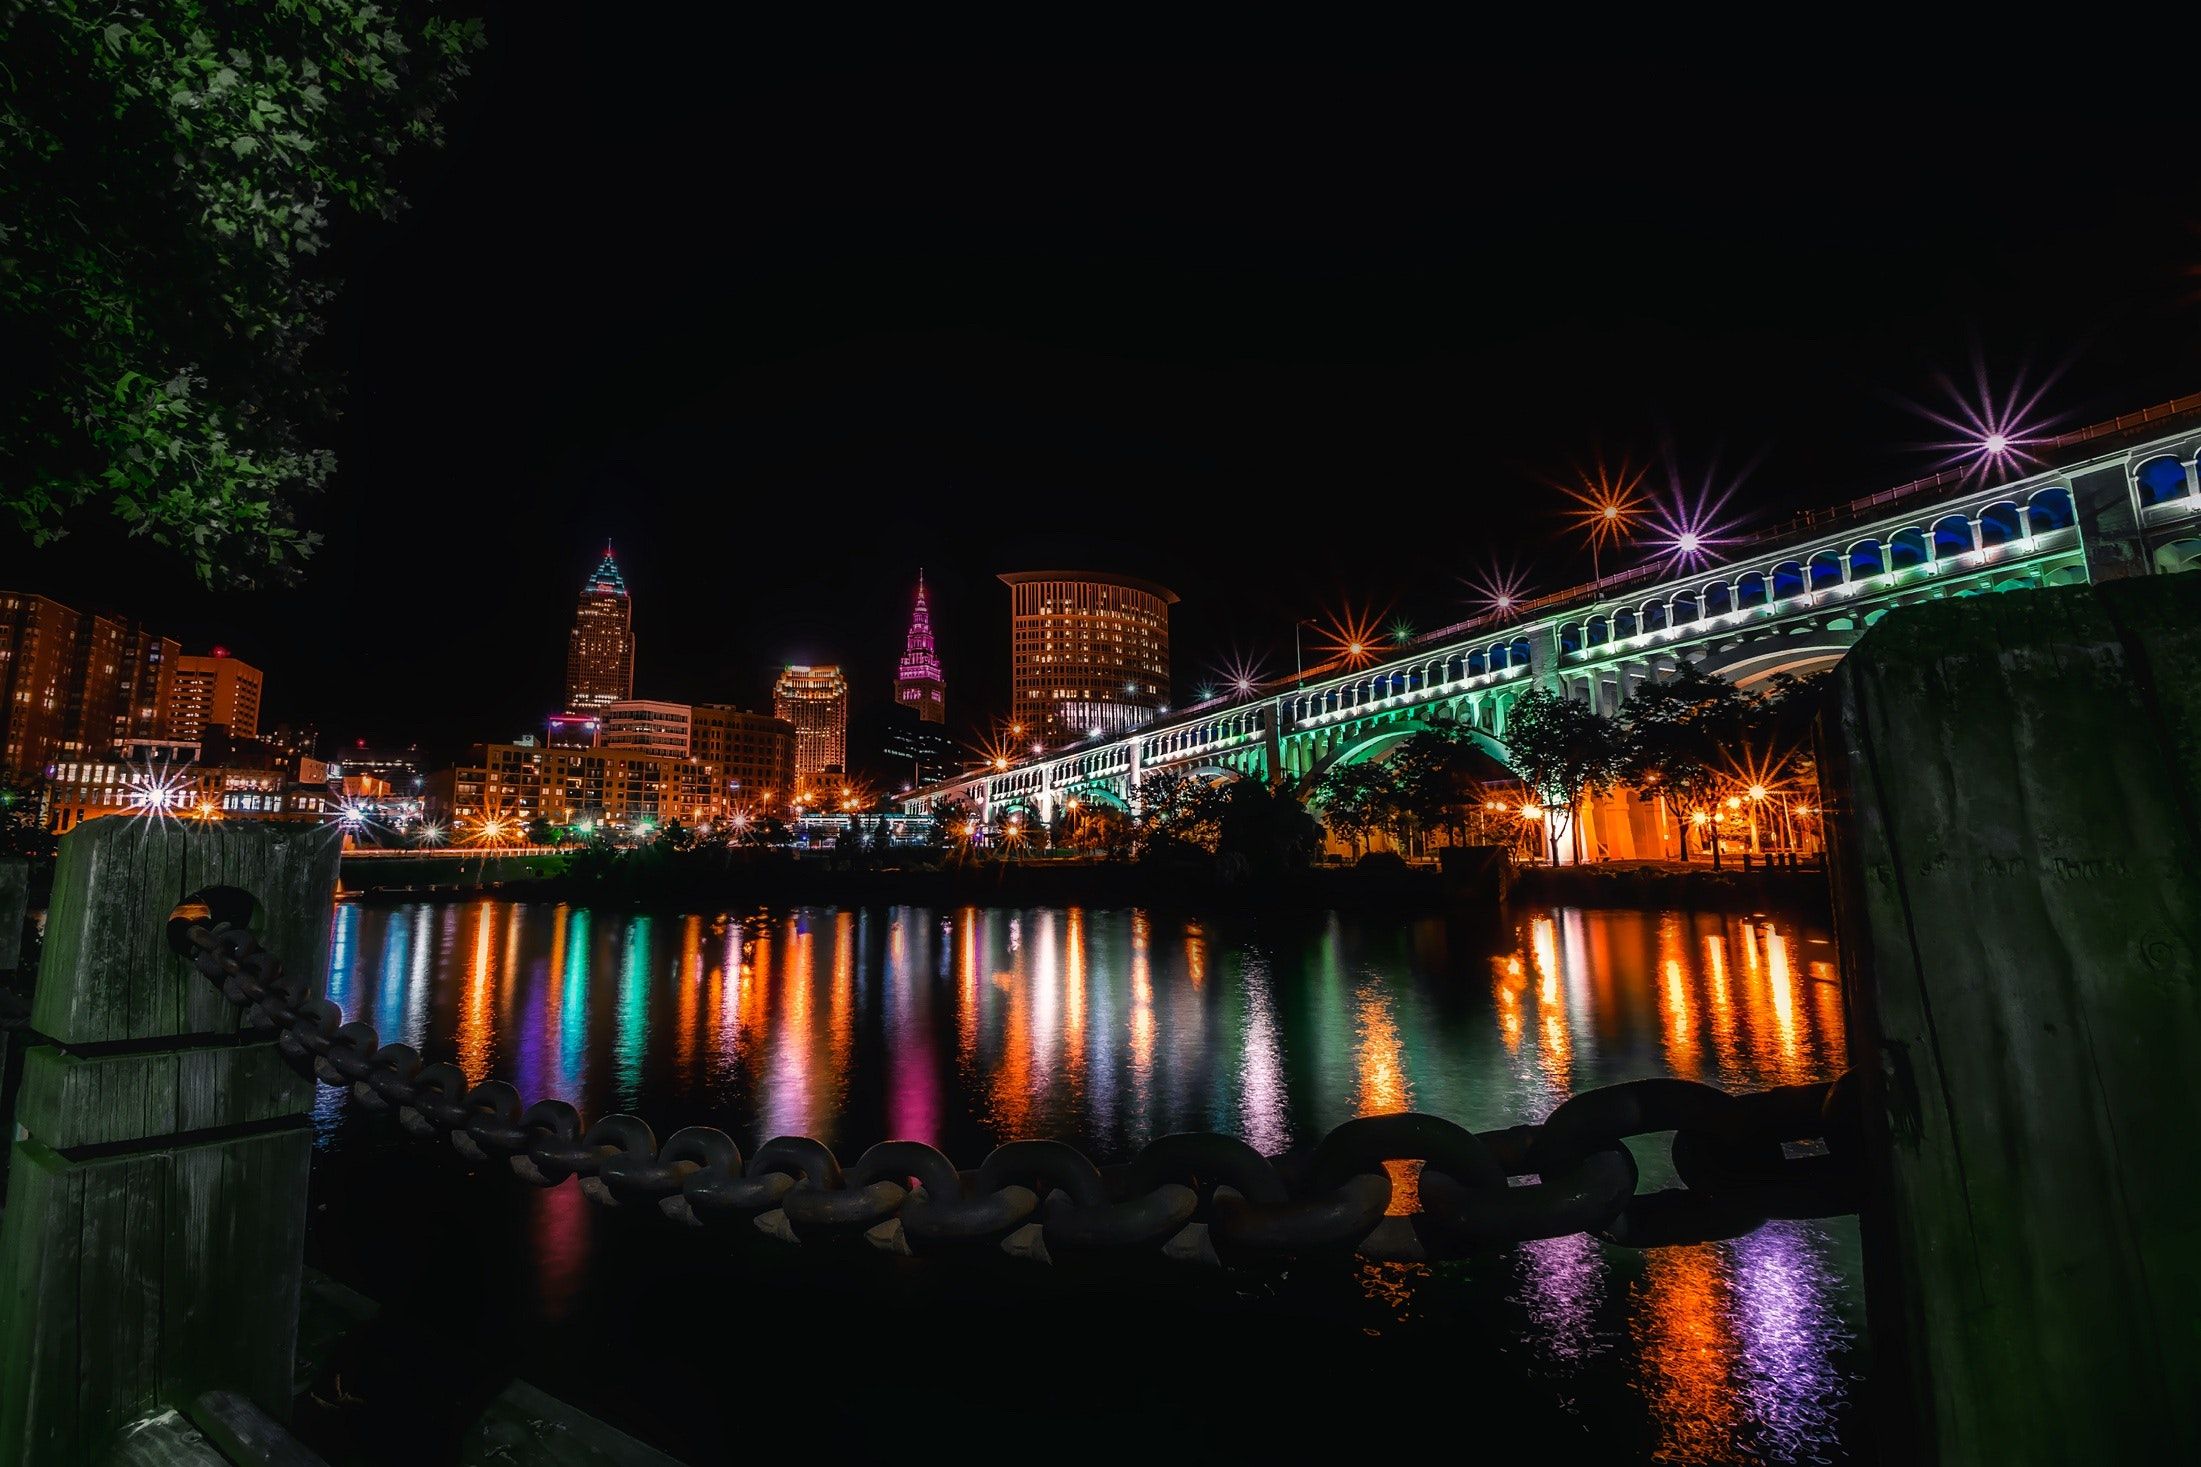 Cleveland at night, the UK